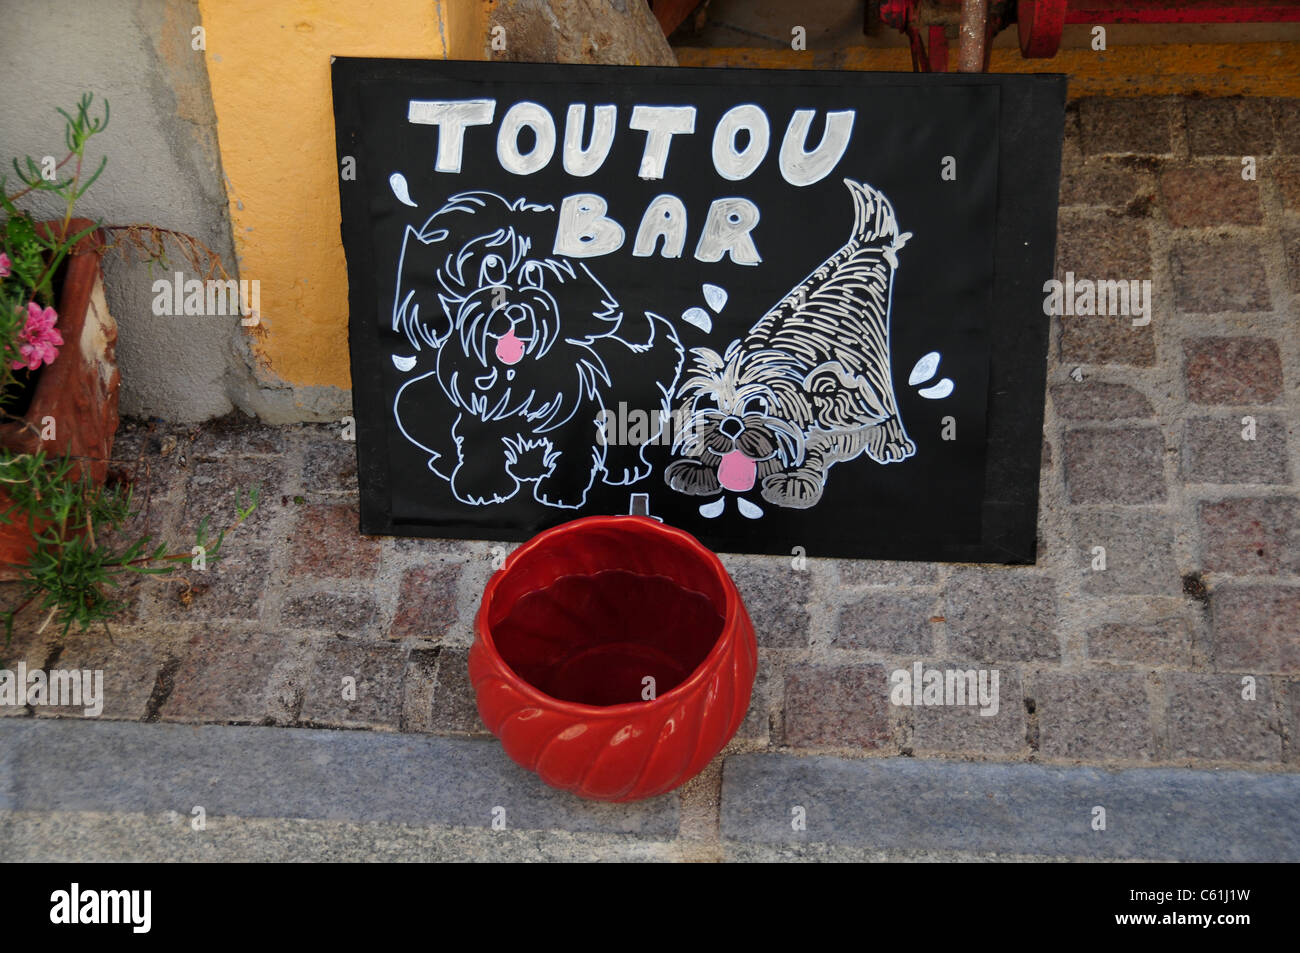 Toutou bar (water bowl) for dogs, Le Castellet, near Toulon, France Stock Photo